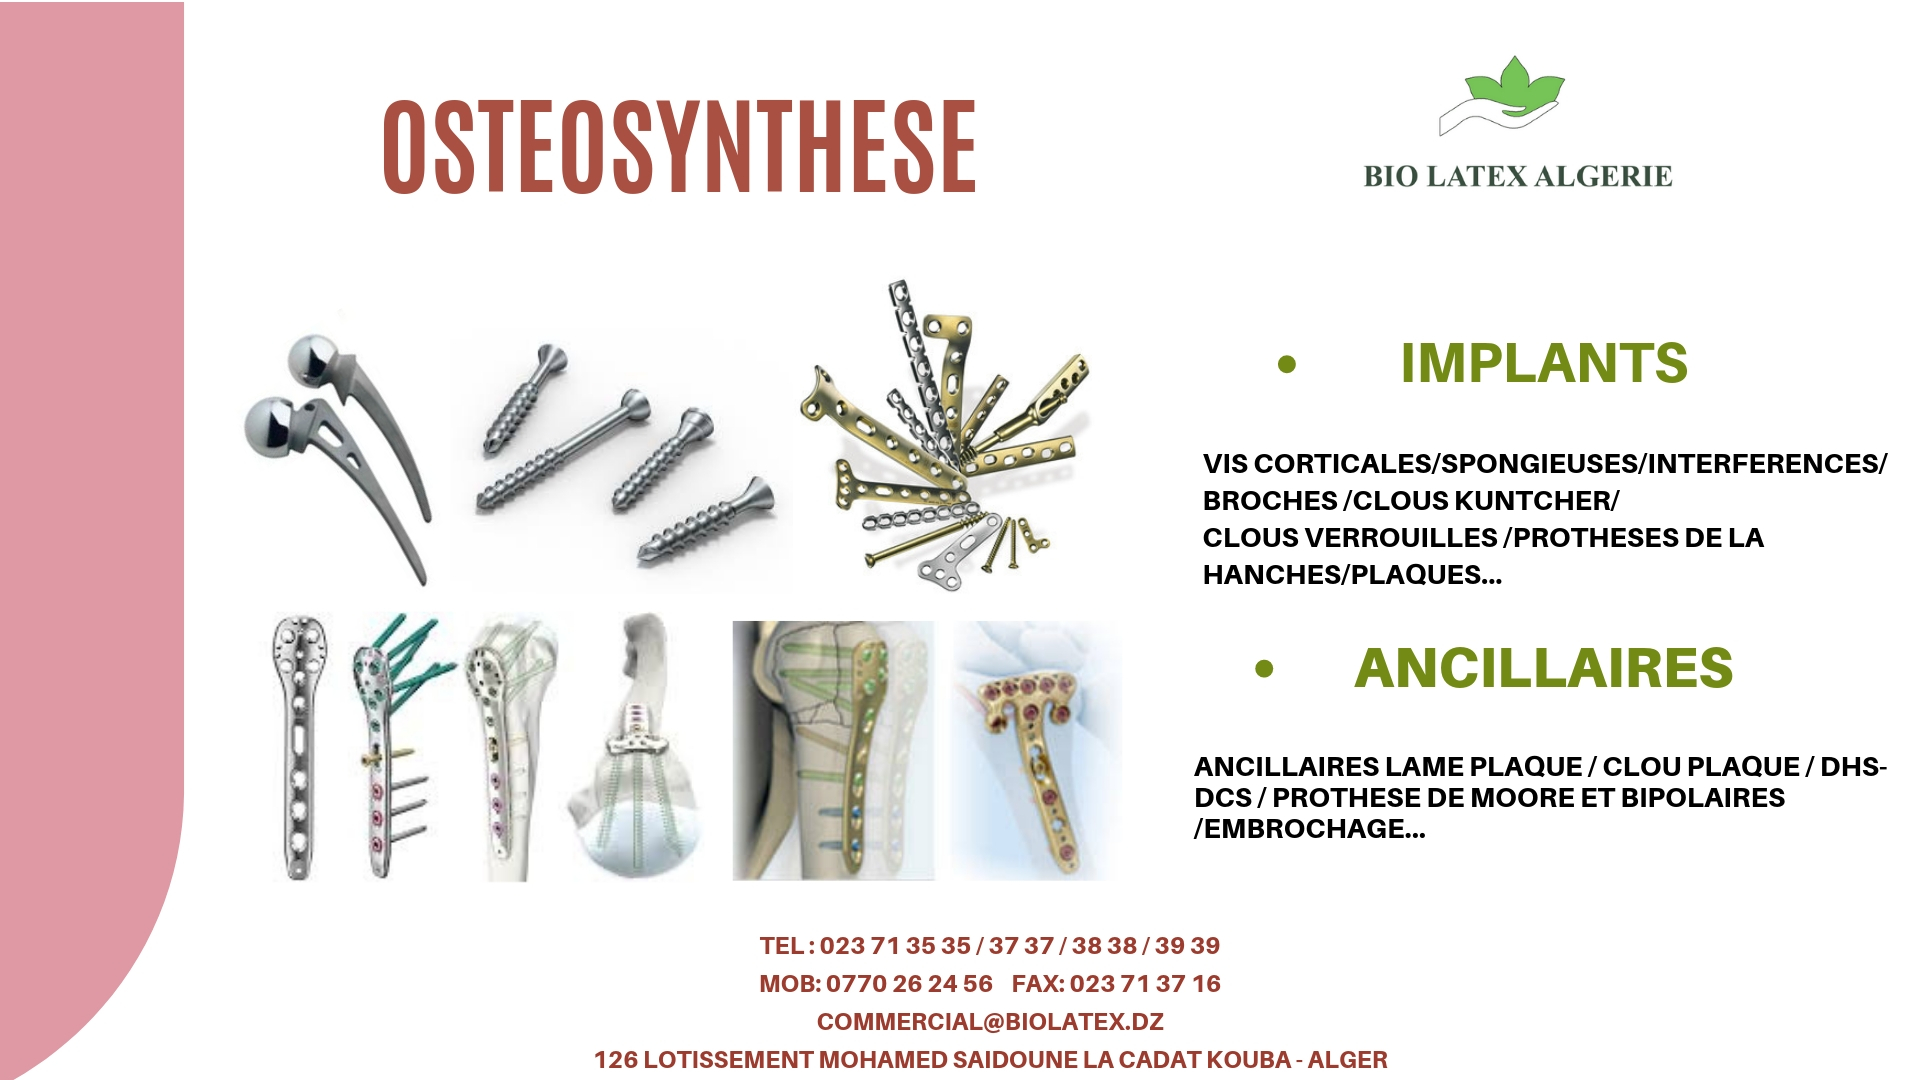 OSTEOSYNTHESE